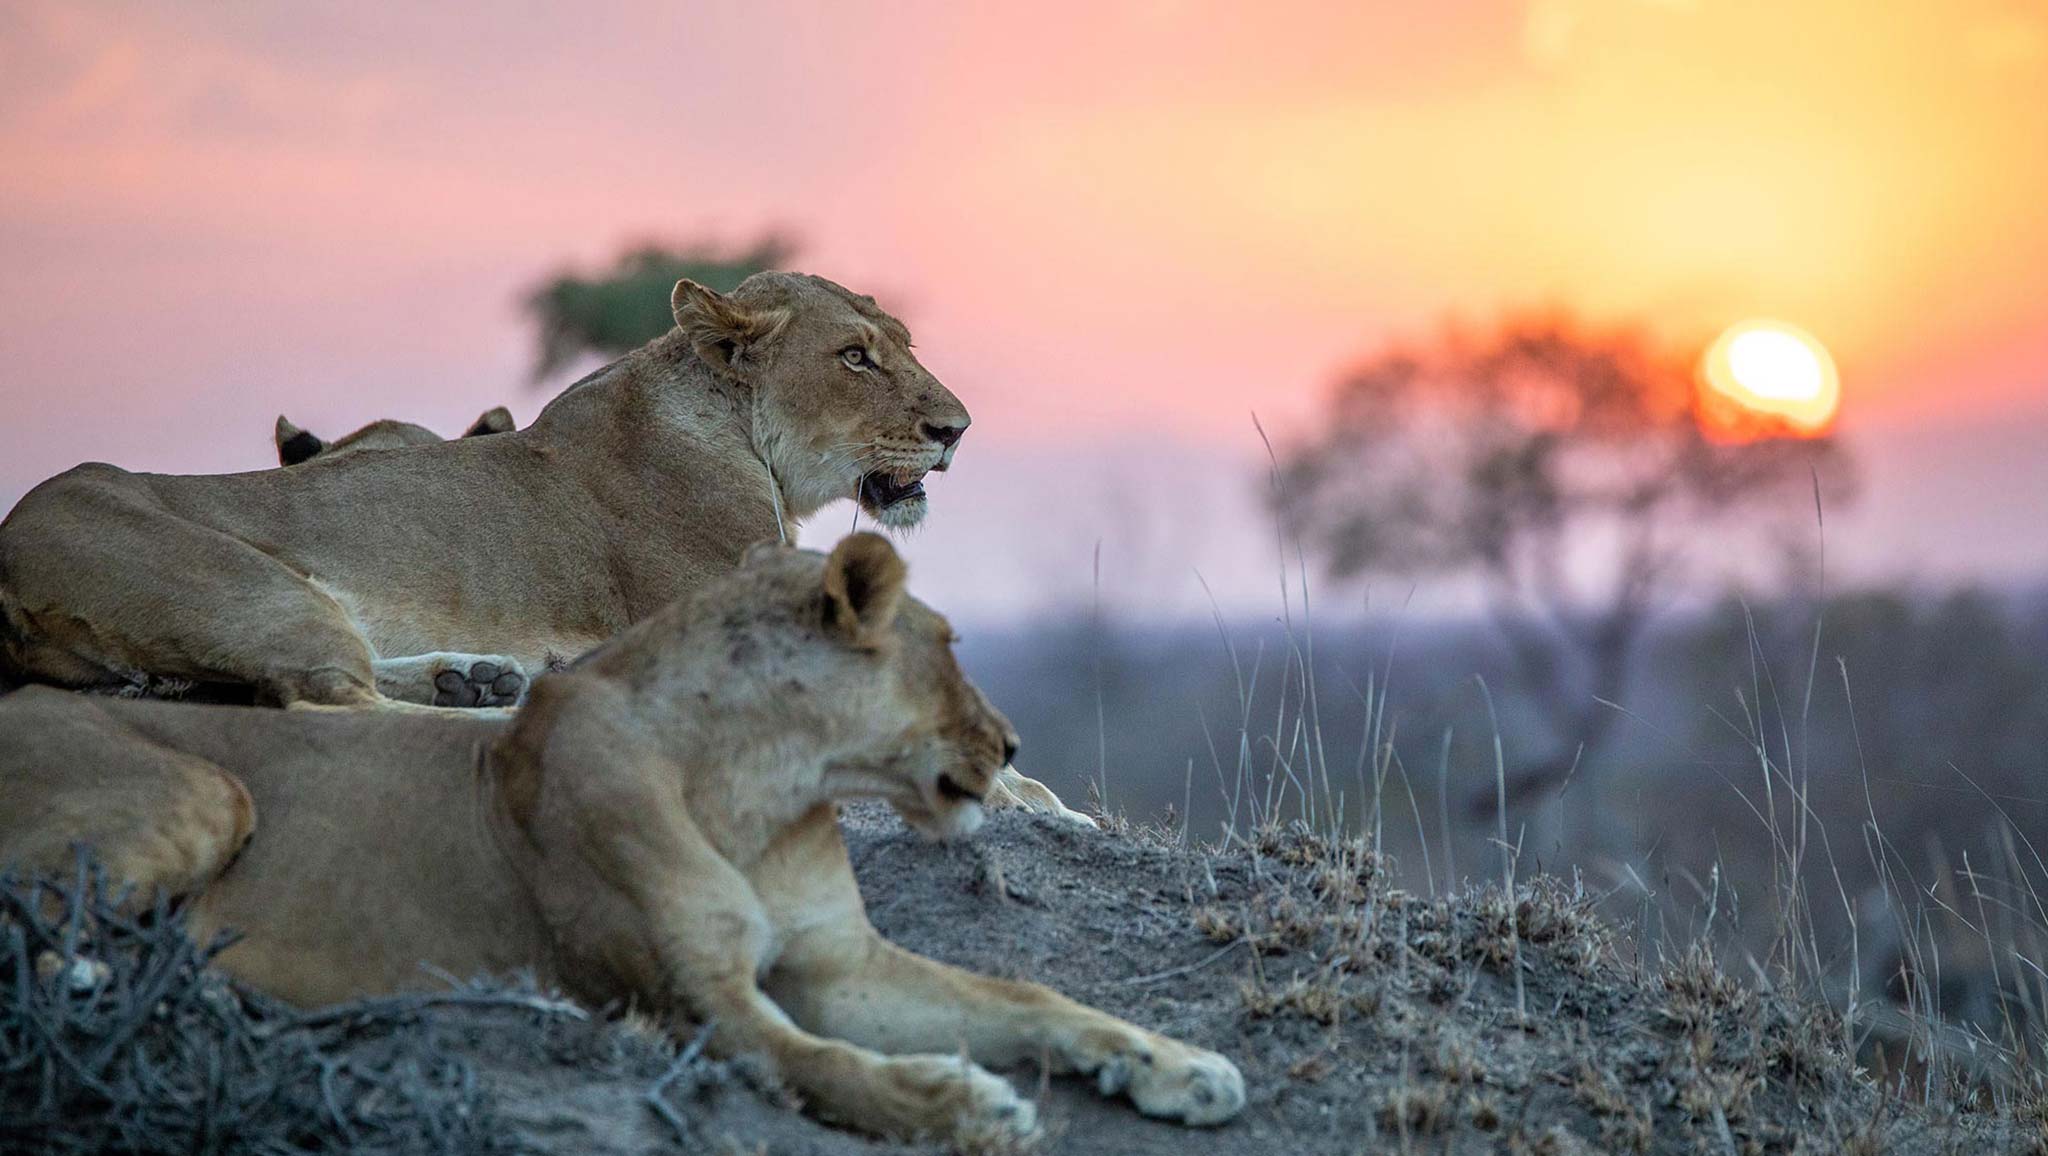 Lionesses enjoying the sunset